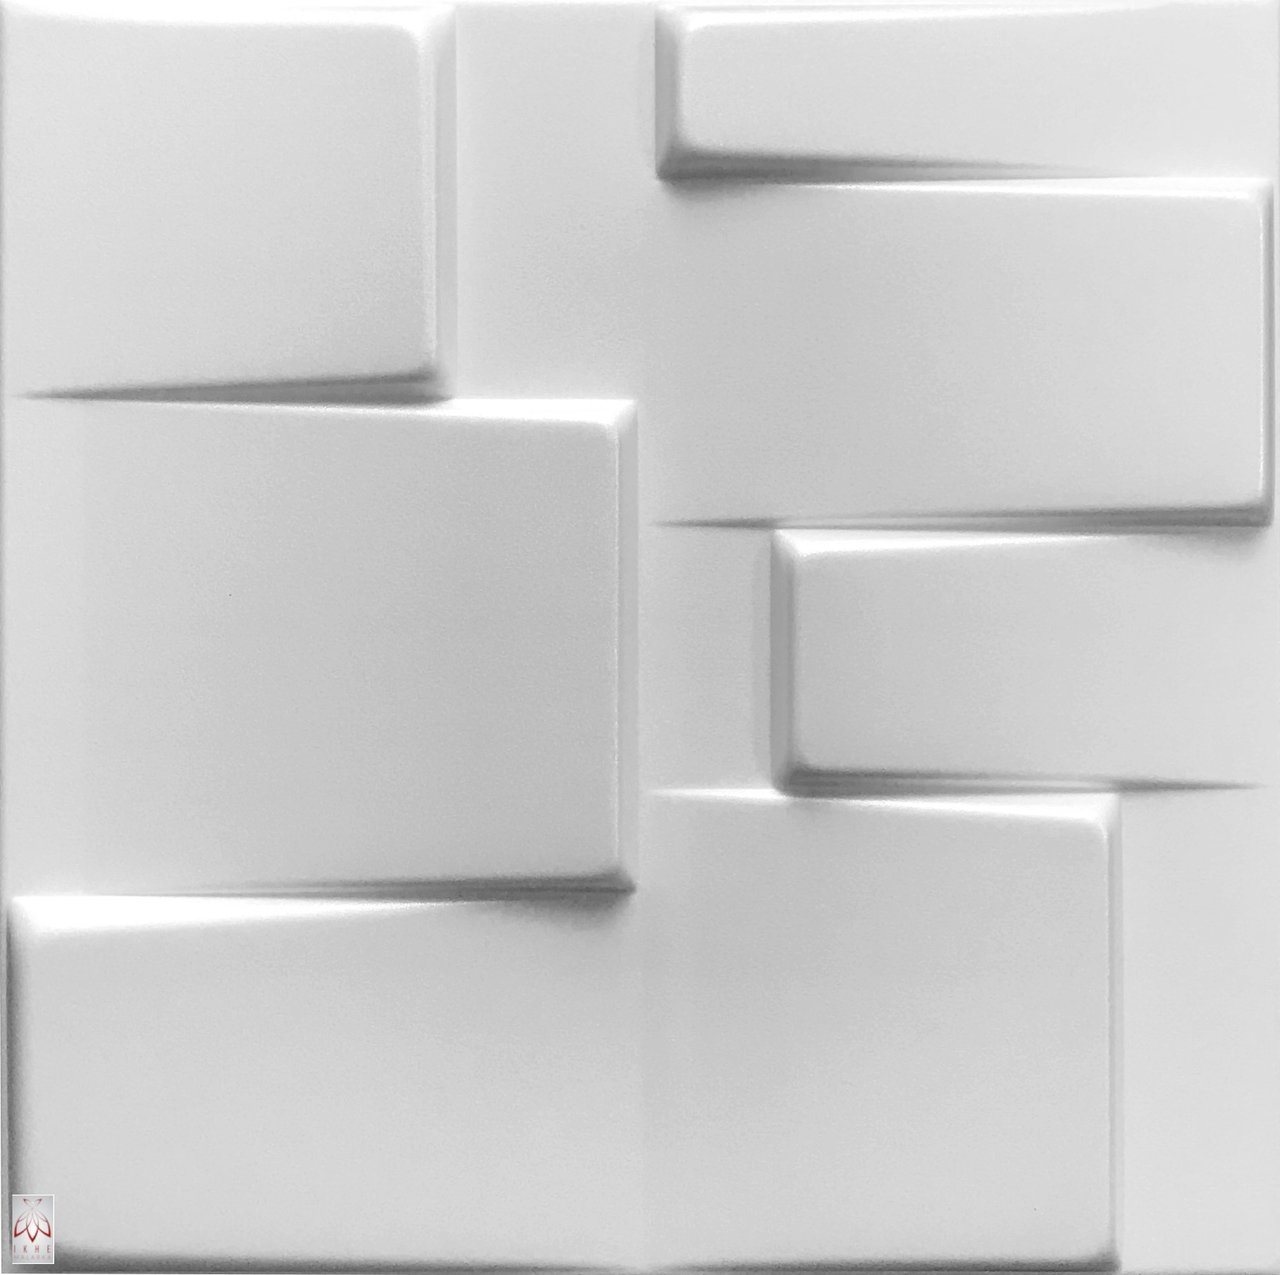 IKHEMalarka 3D Wandpaneel 4m²/16PCS Wanddeko Wandverkleidung Deckenpaneele POLYSTYROL, BxL: 50,00x50,00 cm, 0,25 qm, (16-tlg) 16 Stück = 4m² von IKHEMalarka